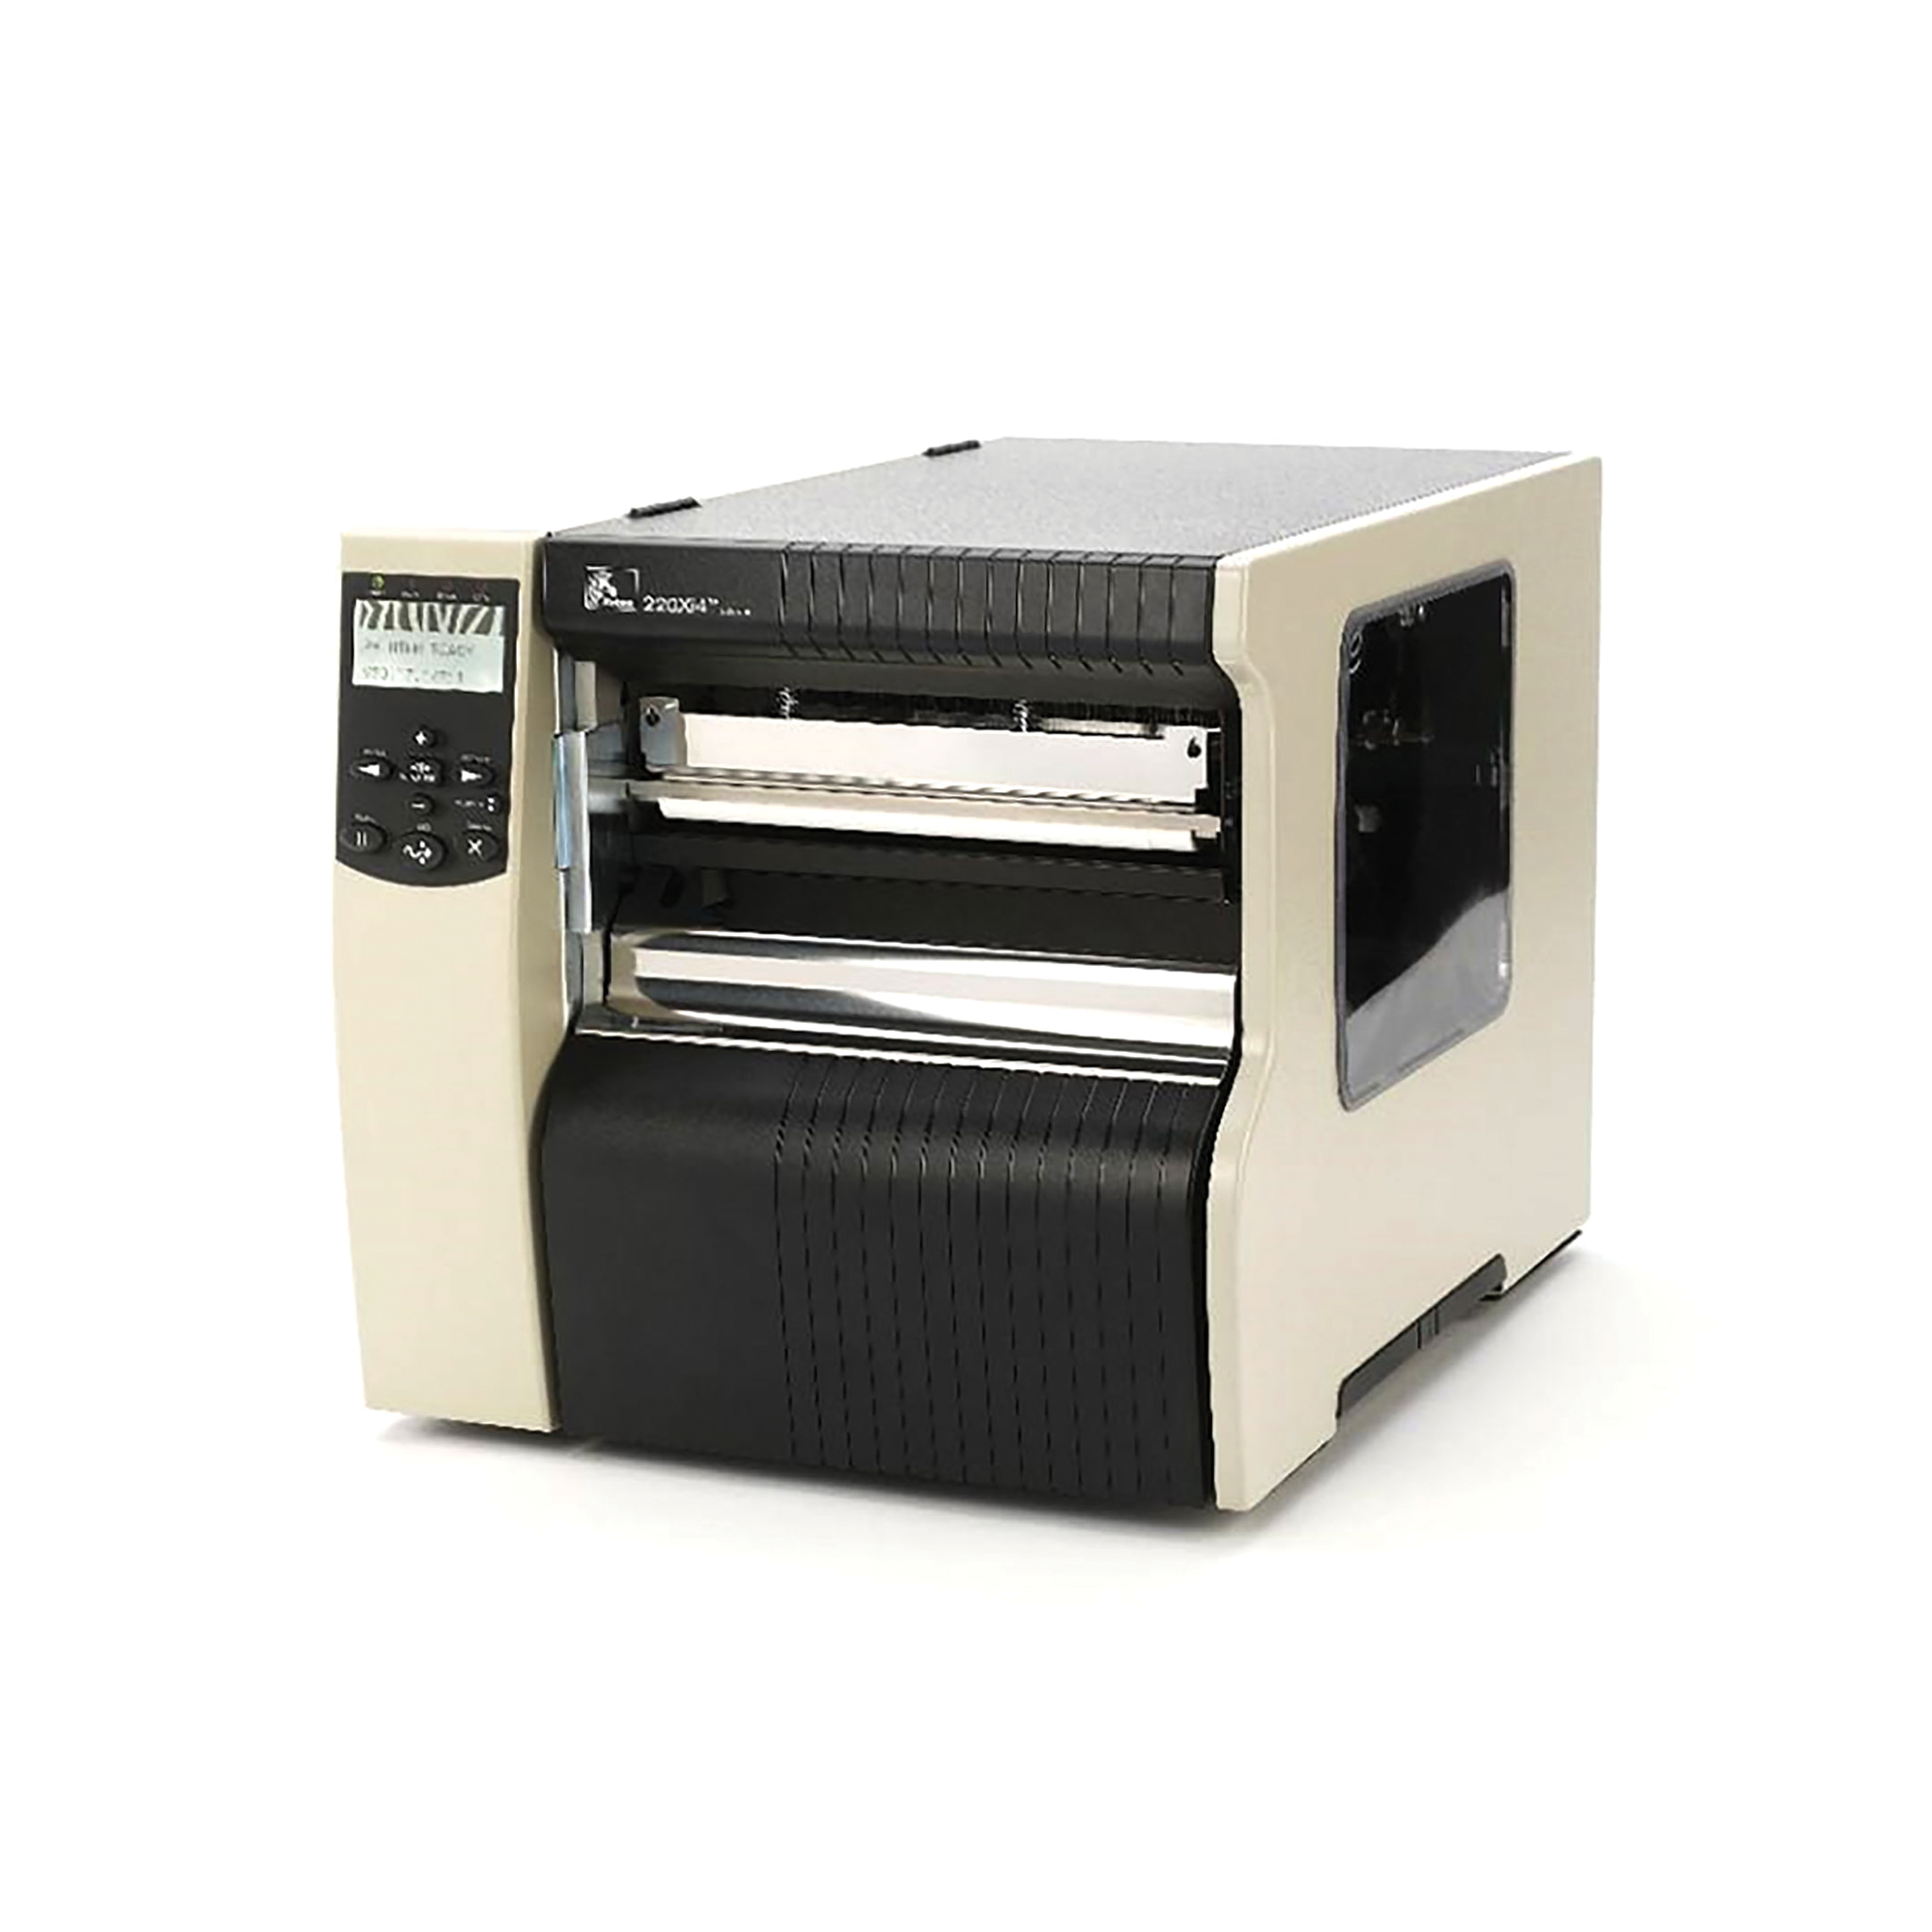 Zebra 220Xi4 Thermal Transfer Printer - 203dpi, US Cord, Serial, Parallel, USB, Int 10/100, Rewind with Peel - MPN: 220-801-00200